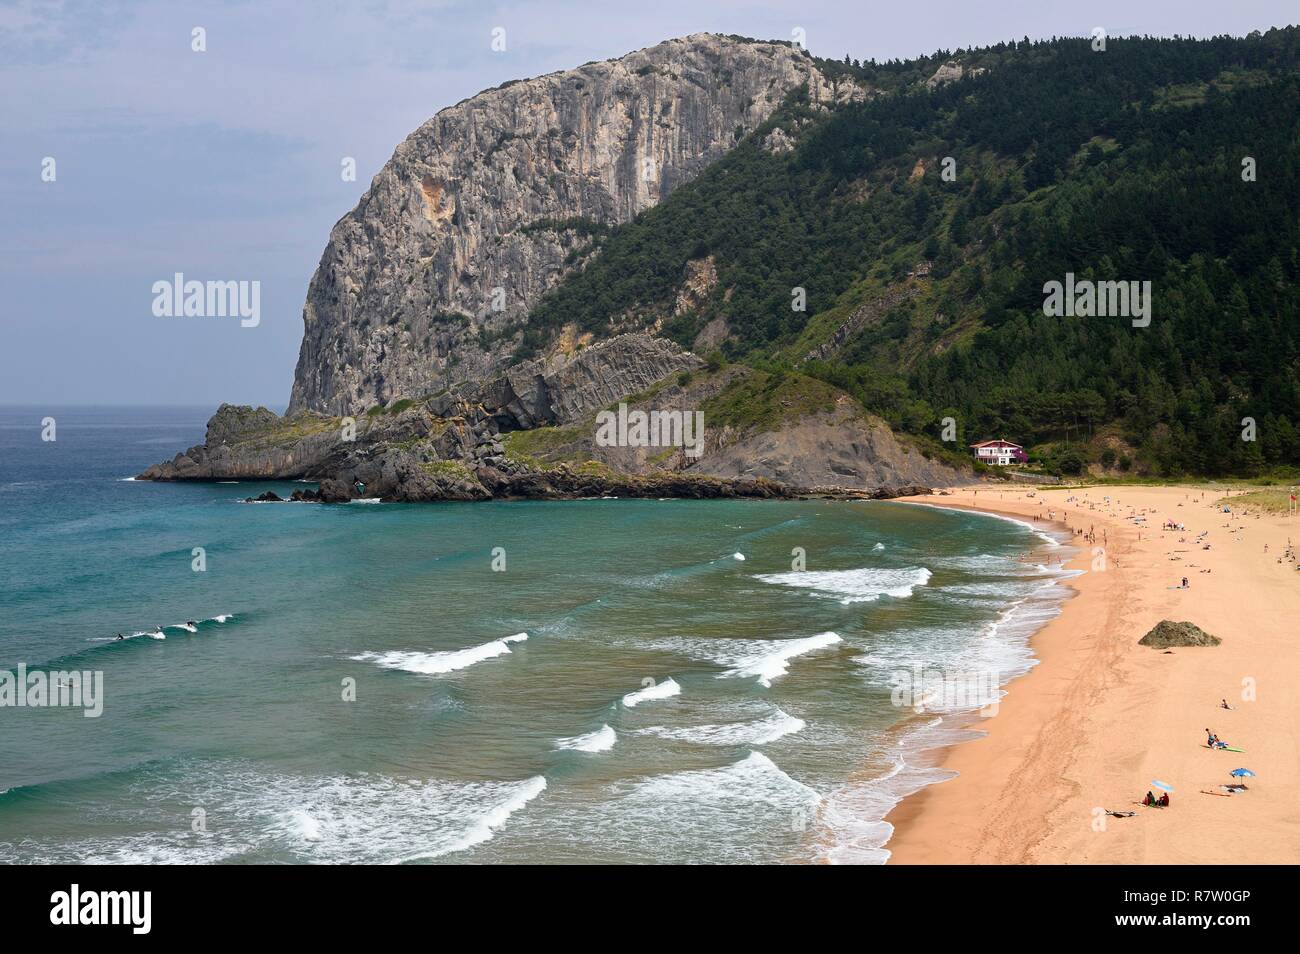 Spain, Basque Country, Vizcaya Province, Gernika-Lumo region, Urdaibai estuary Biosphere Reserve, Ibarrangelu, Laga beach and the cape of Ogono (279 m) in the background Stock Photo